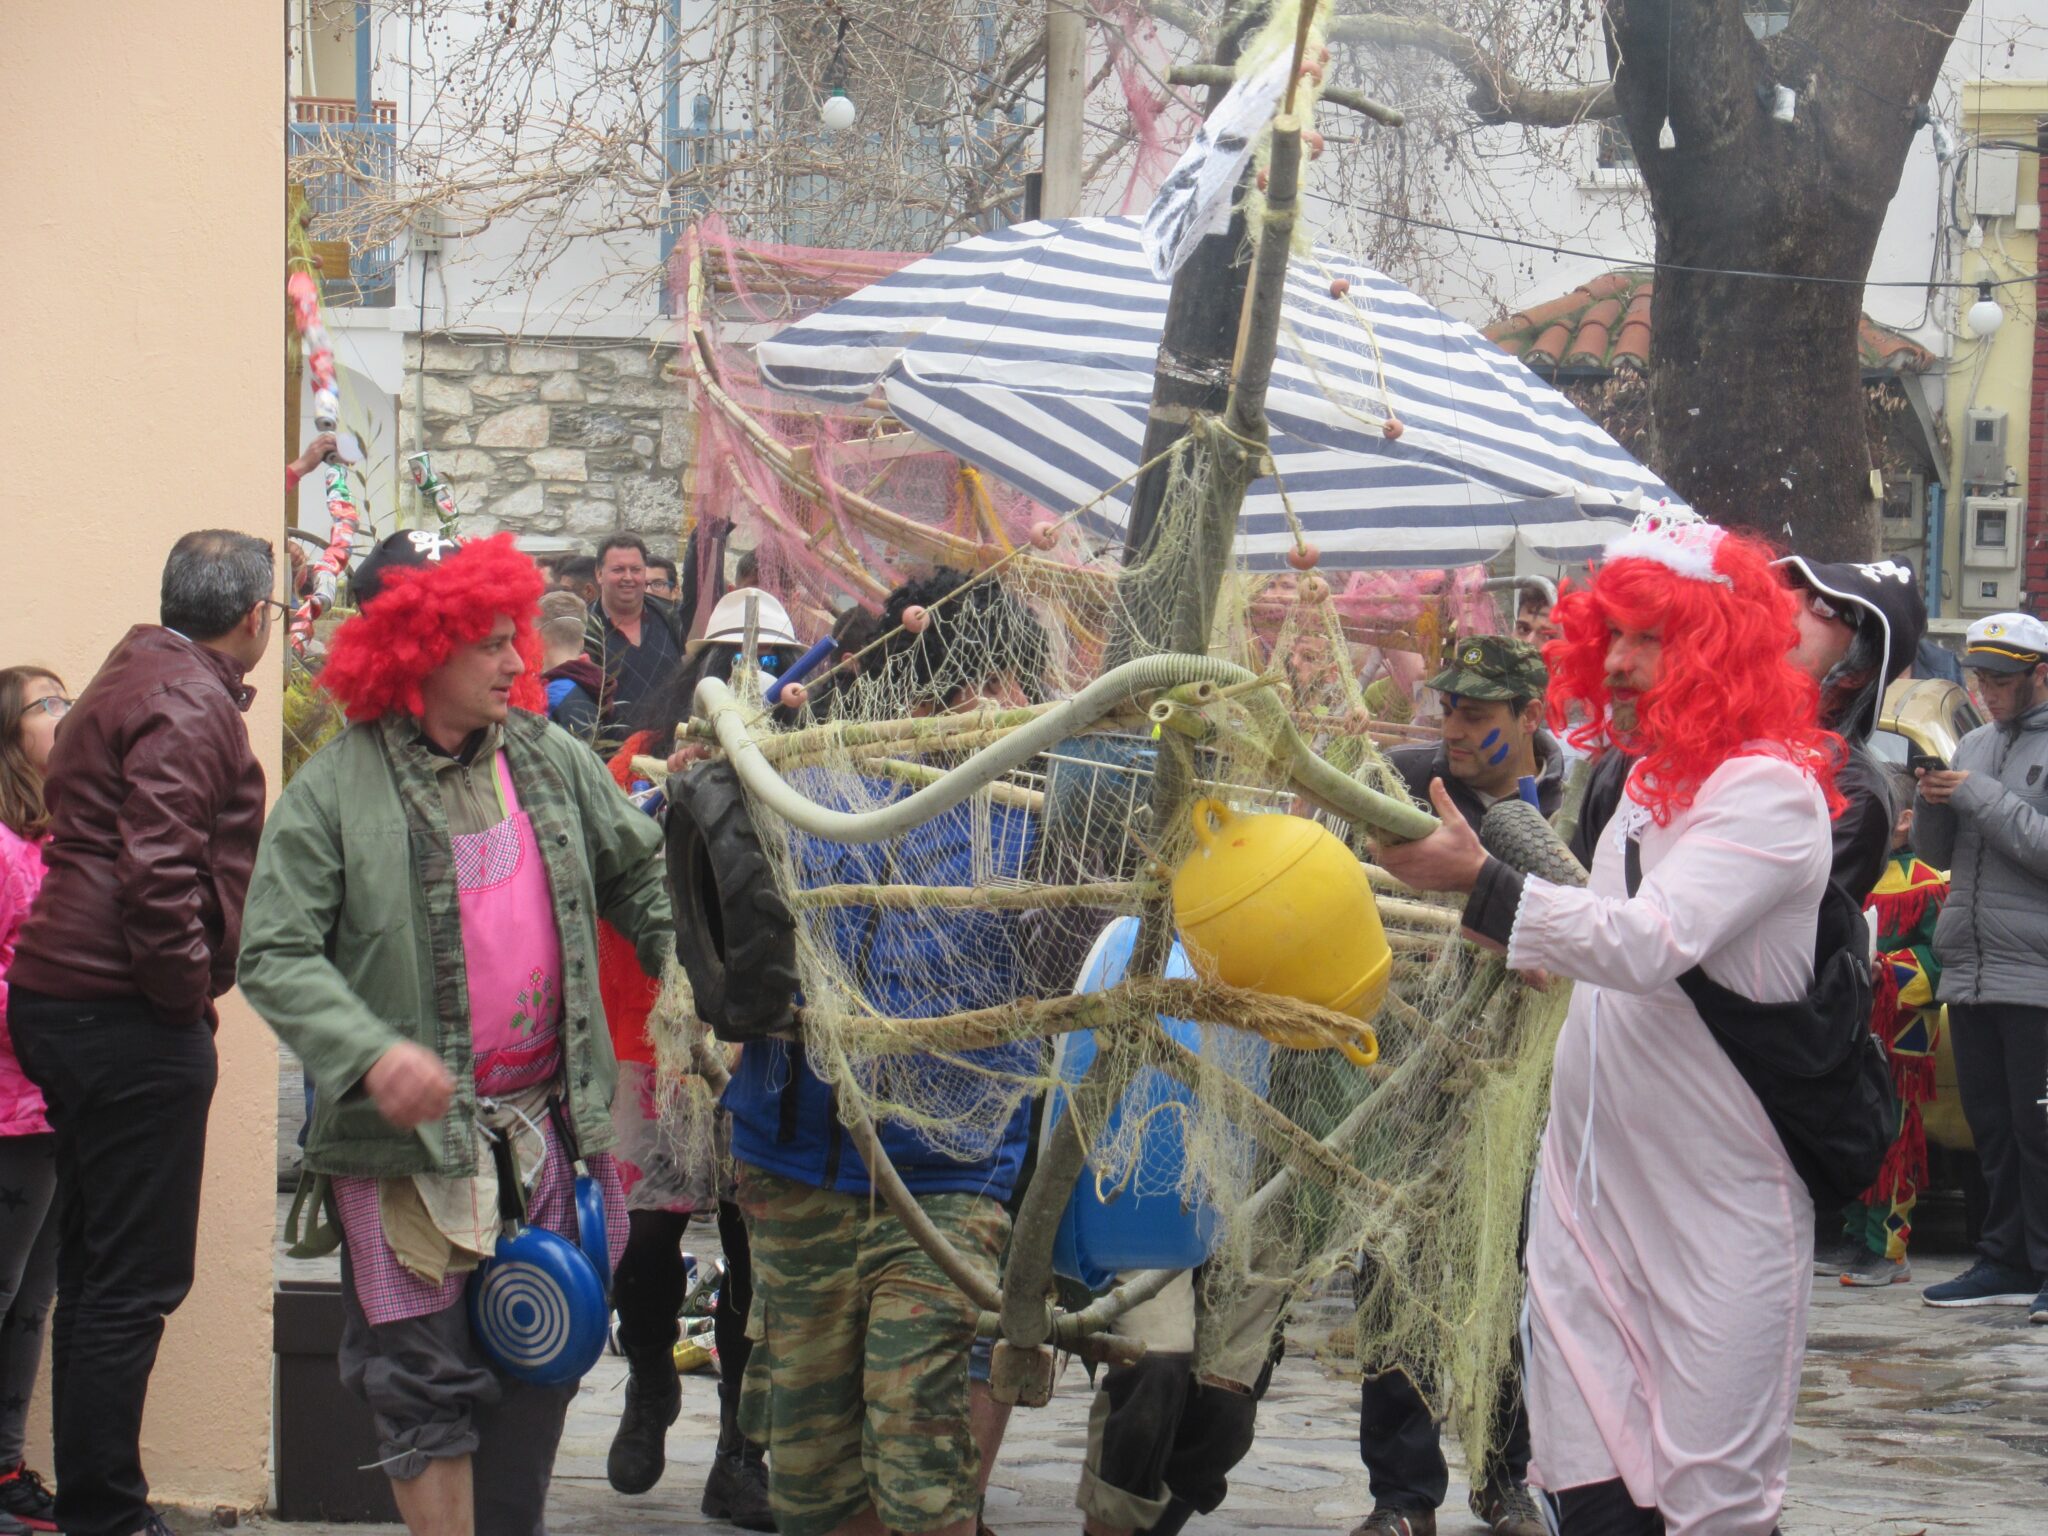 Apokries in Skopelos, Skopelos Carnival Celebration Greece customs